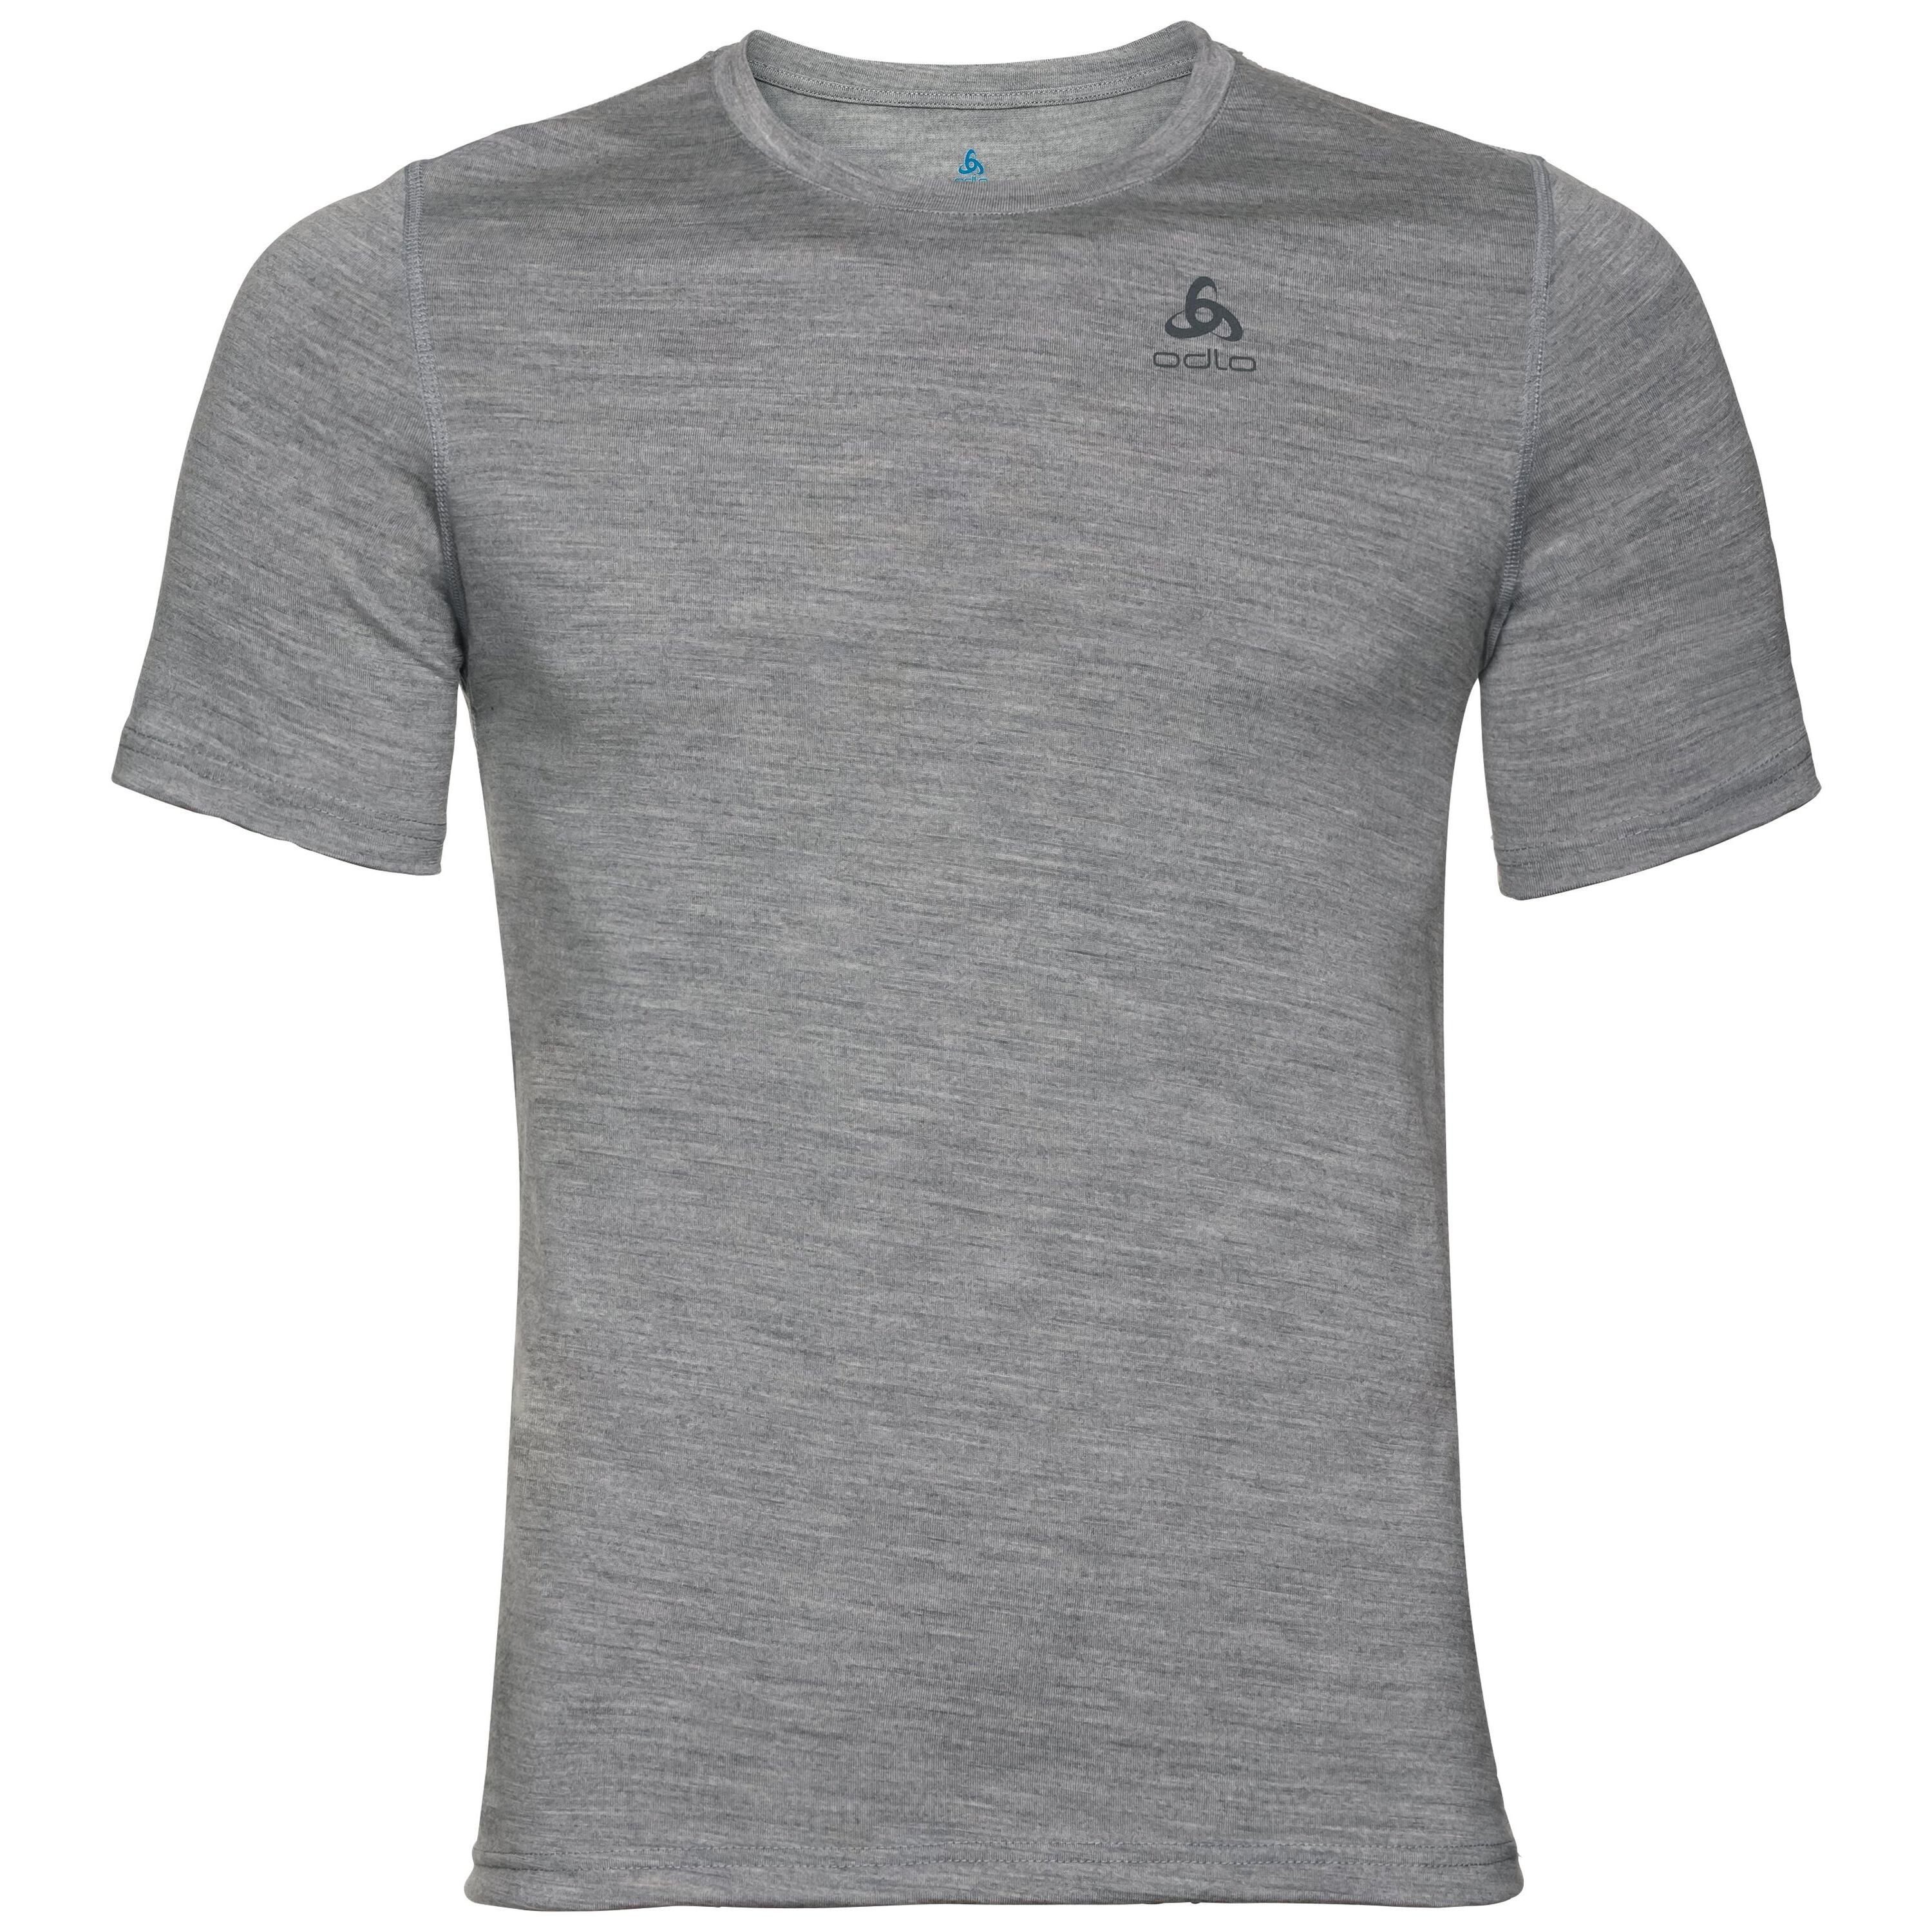 Natural Herren Warm Funktionsunterhemd Odlo T-Shirt grey Funktionsunterwäsche 100% Merino melange